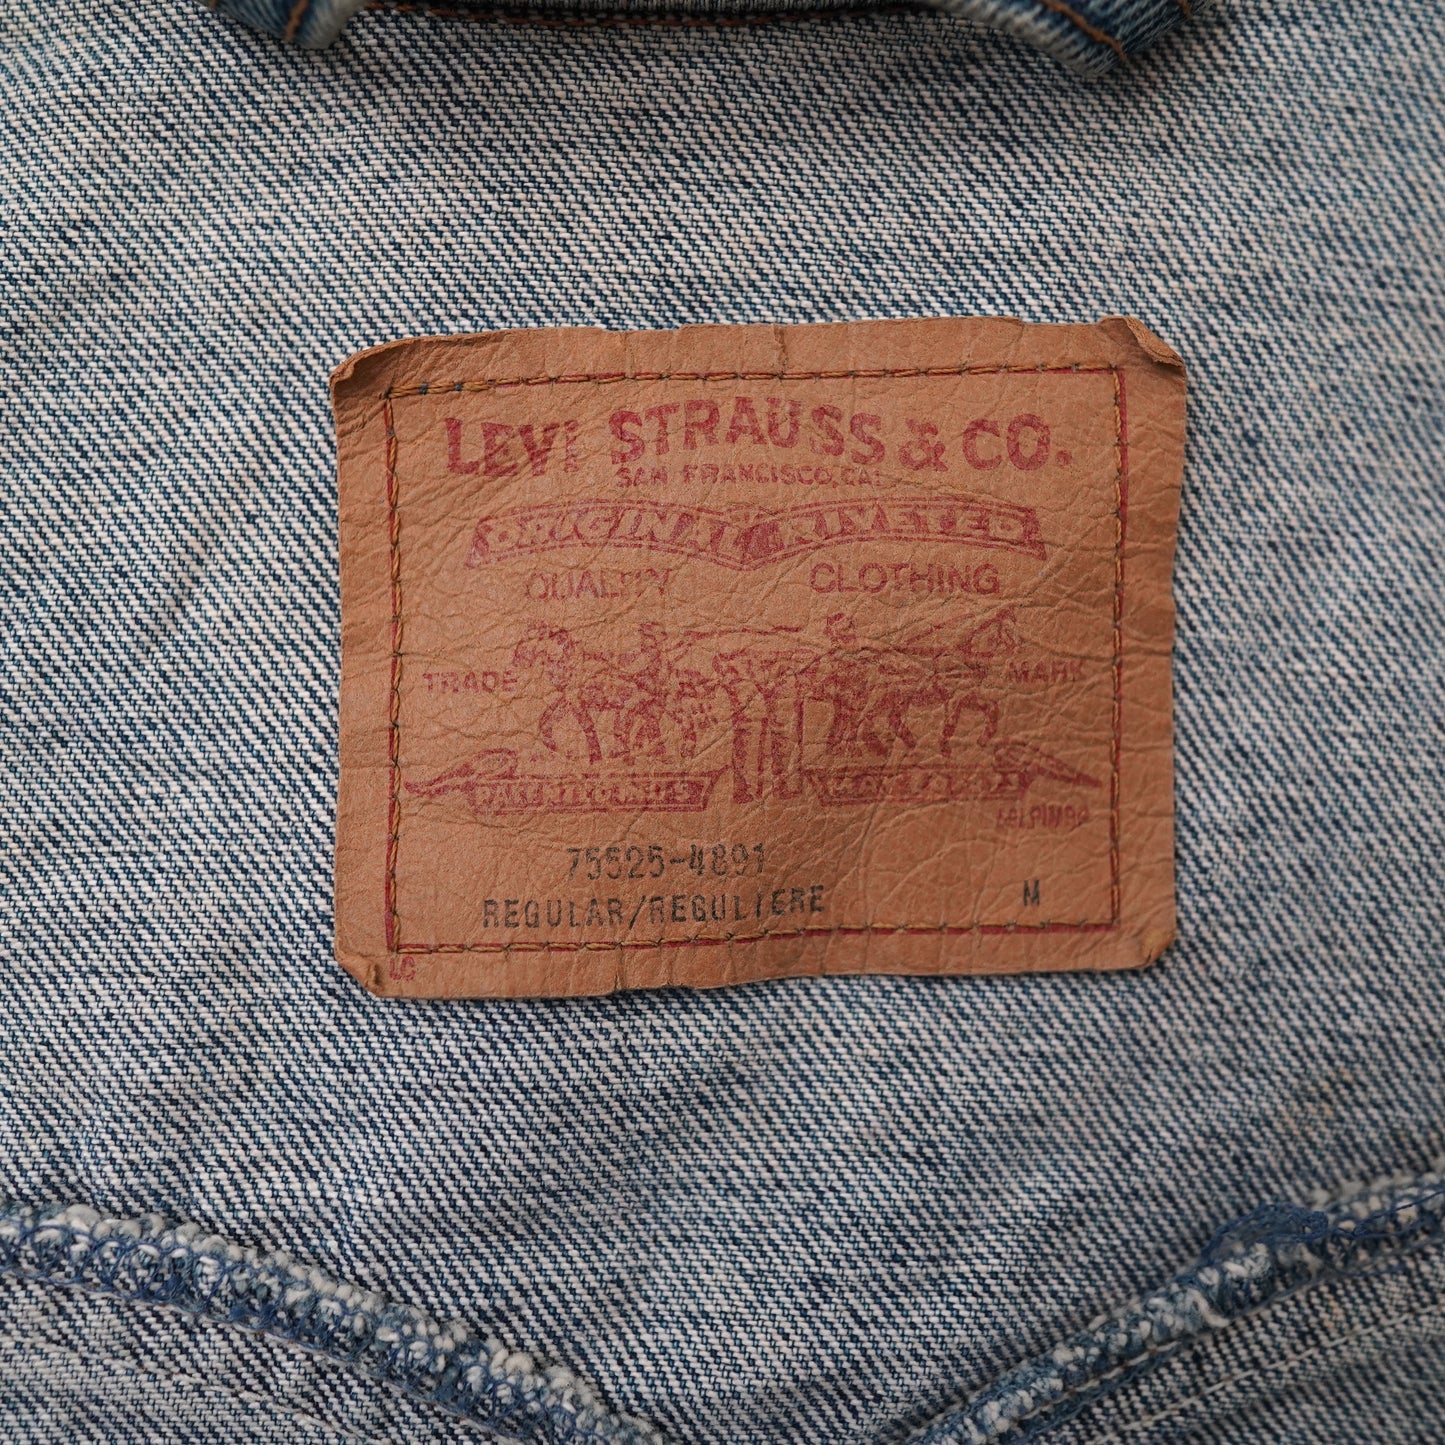 90s Levi's denim jacket